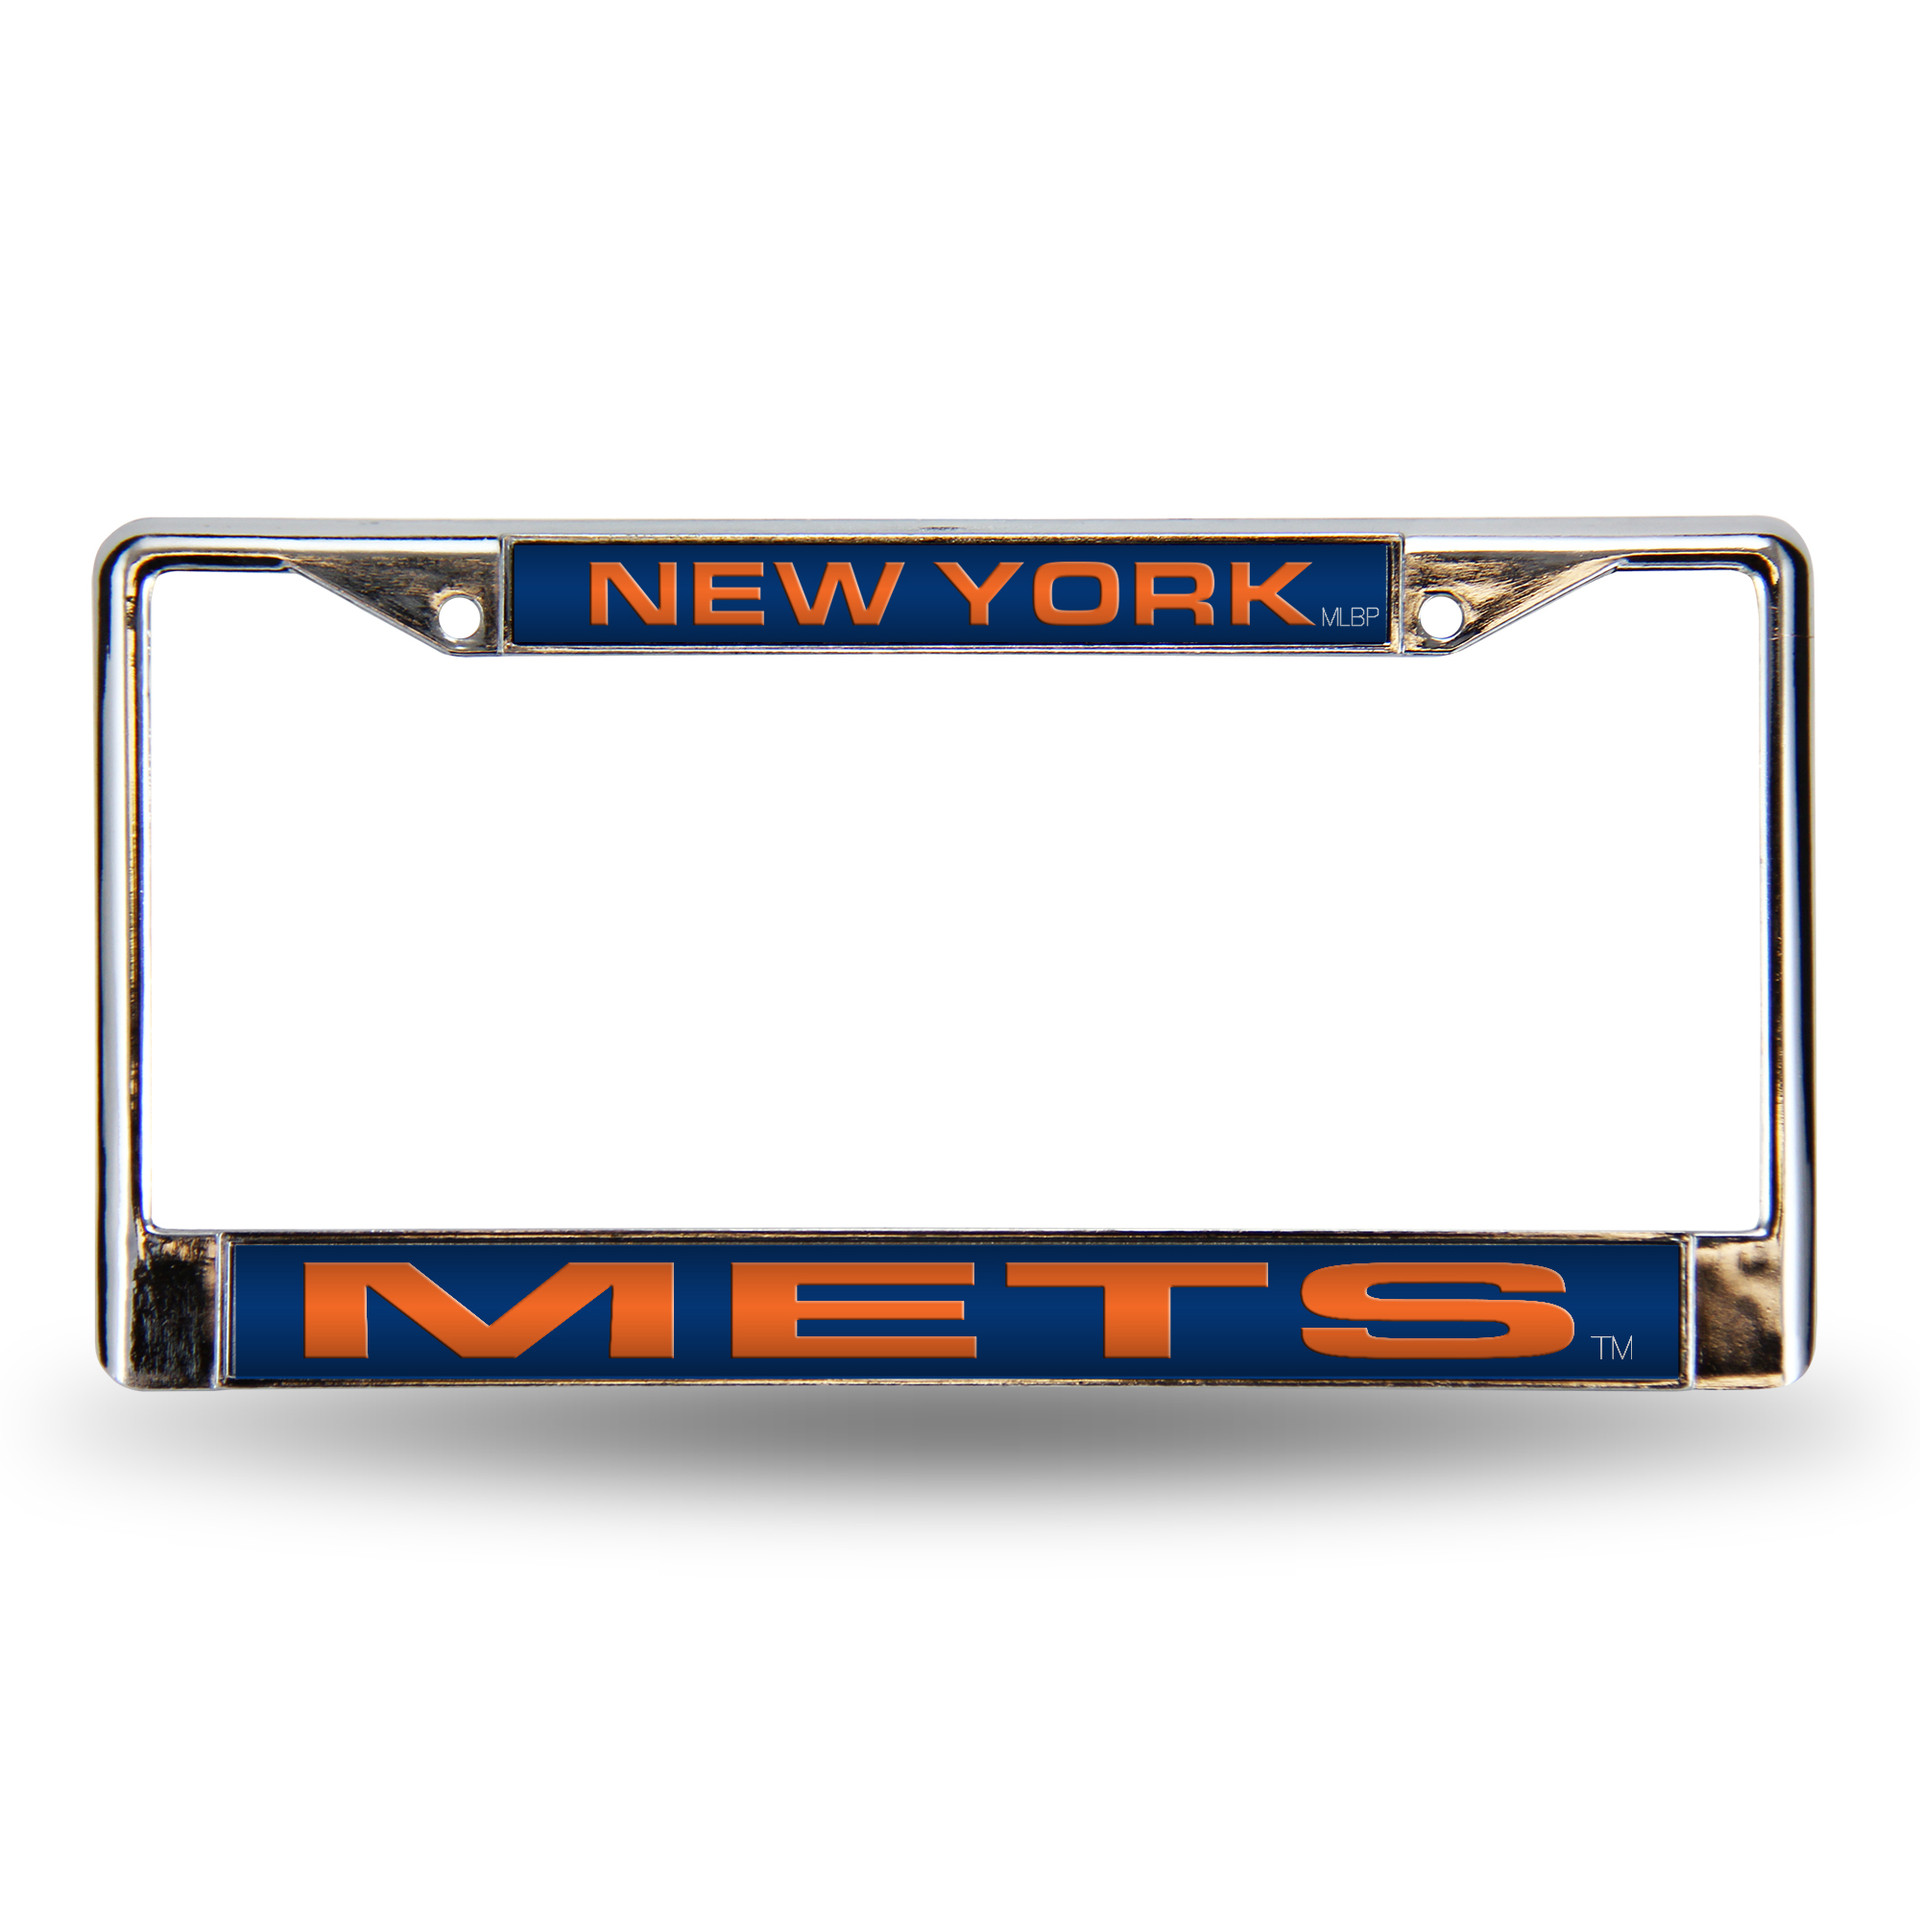 New York Mets License Plate Frame Laser Cut Blue With Orange Letters